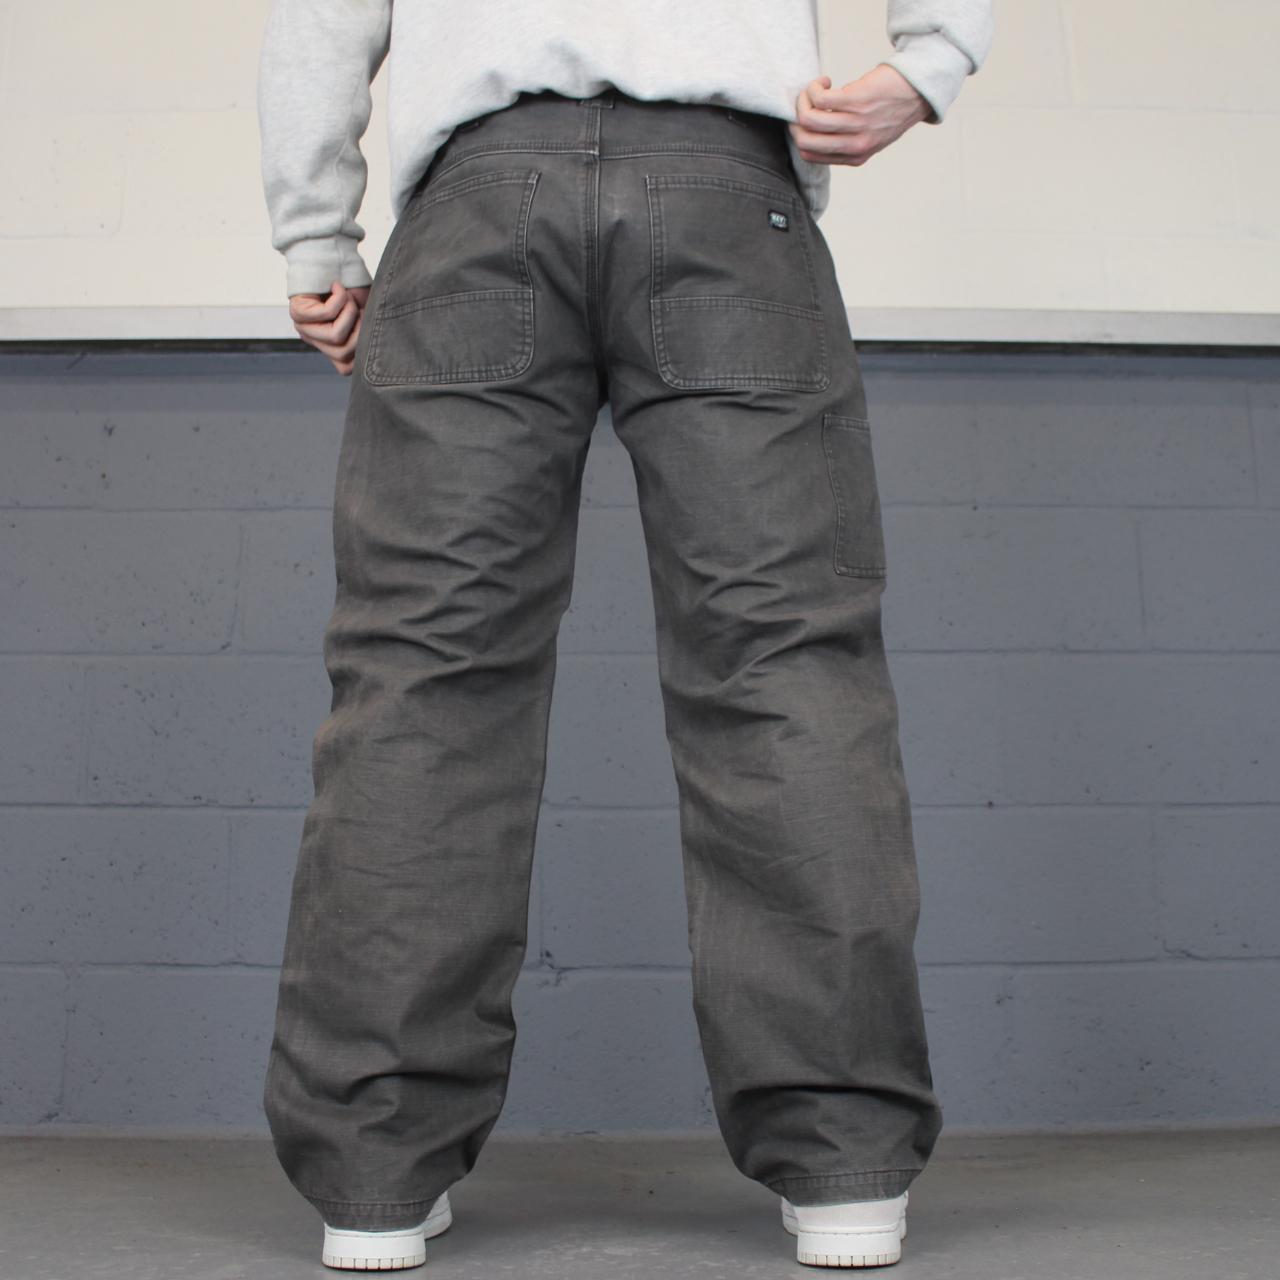 Carpenter jeans Key loose multi pocket pants... - Depop